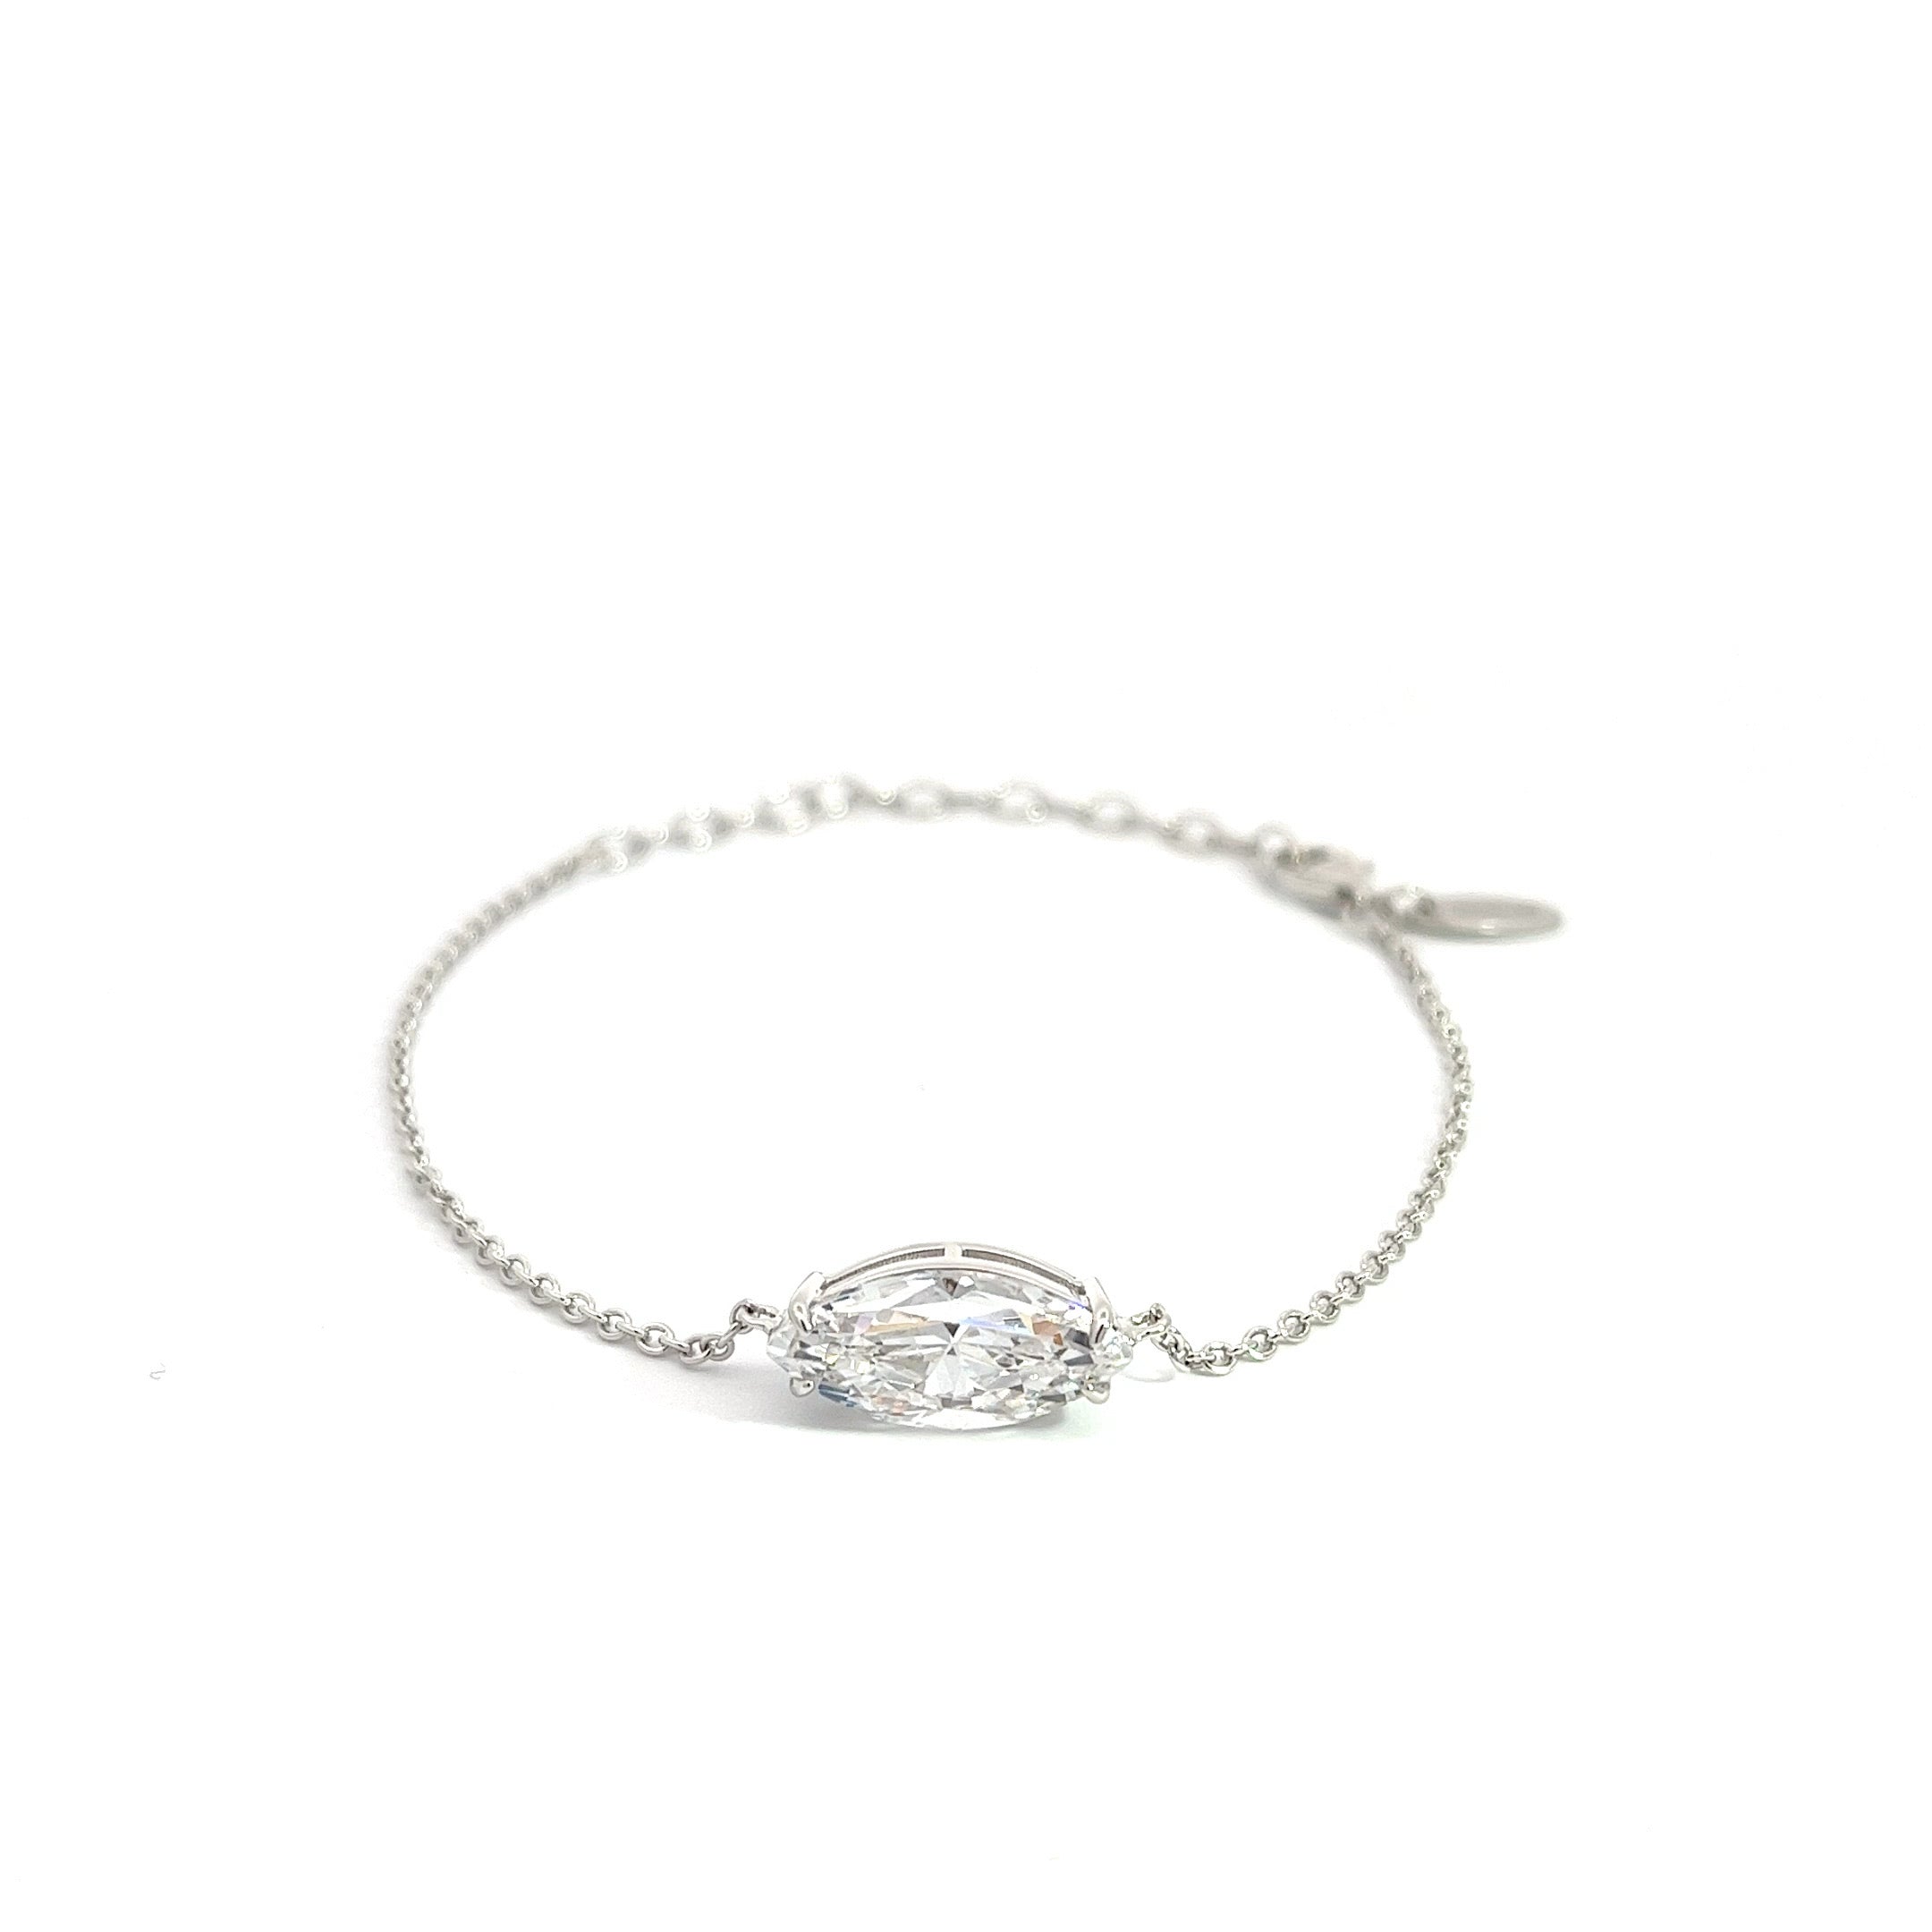 Elegant Marquise Cut 15 x 7 mm CZ Silver Bracelet